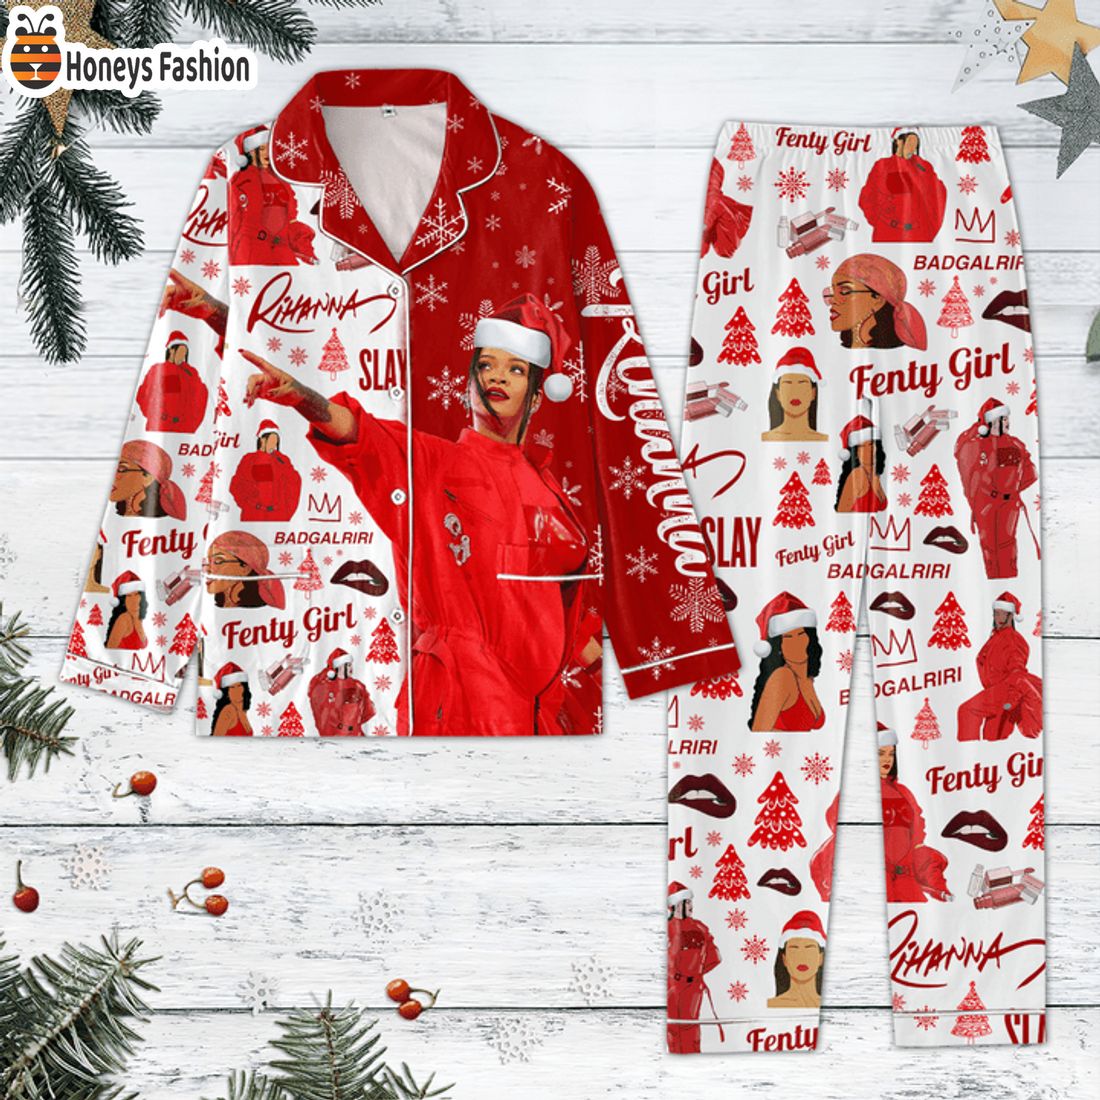 BEST SELLER Rihanna Fenty Girl Badgalriri Christmas Pajamas Set